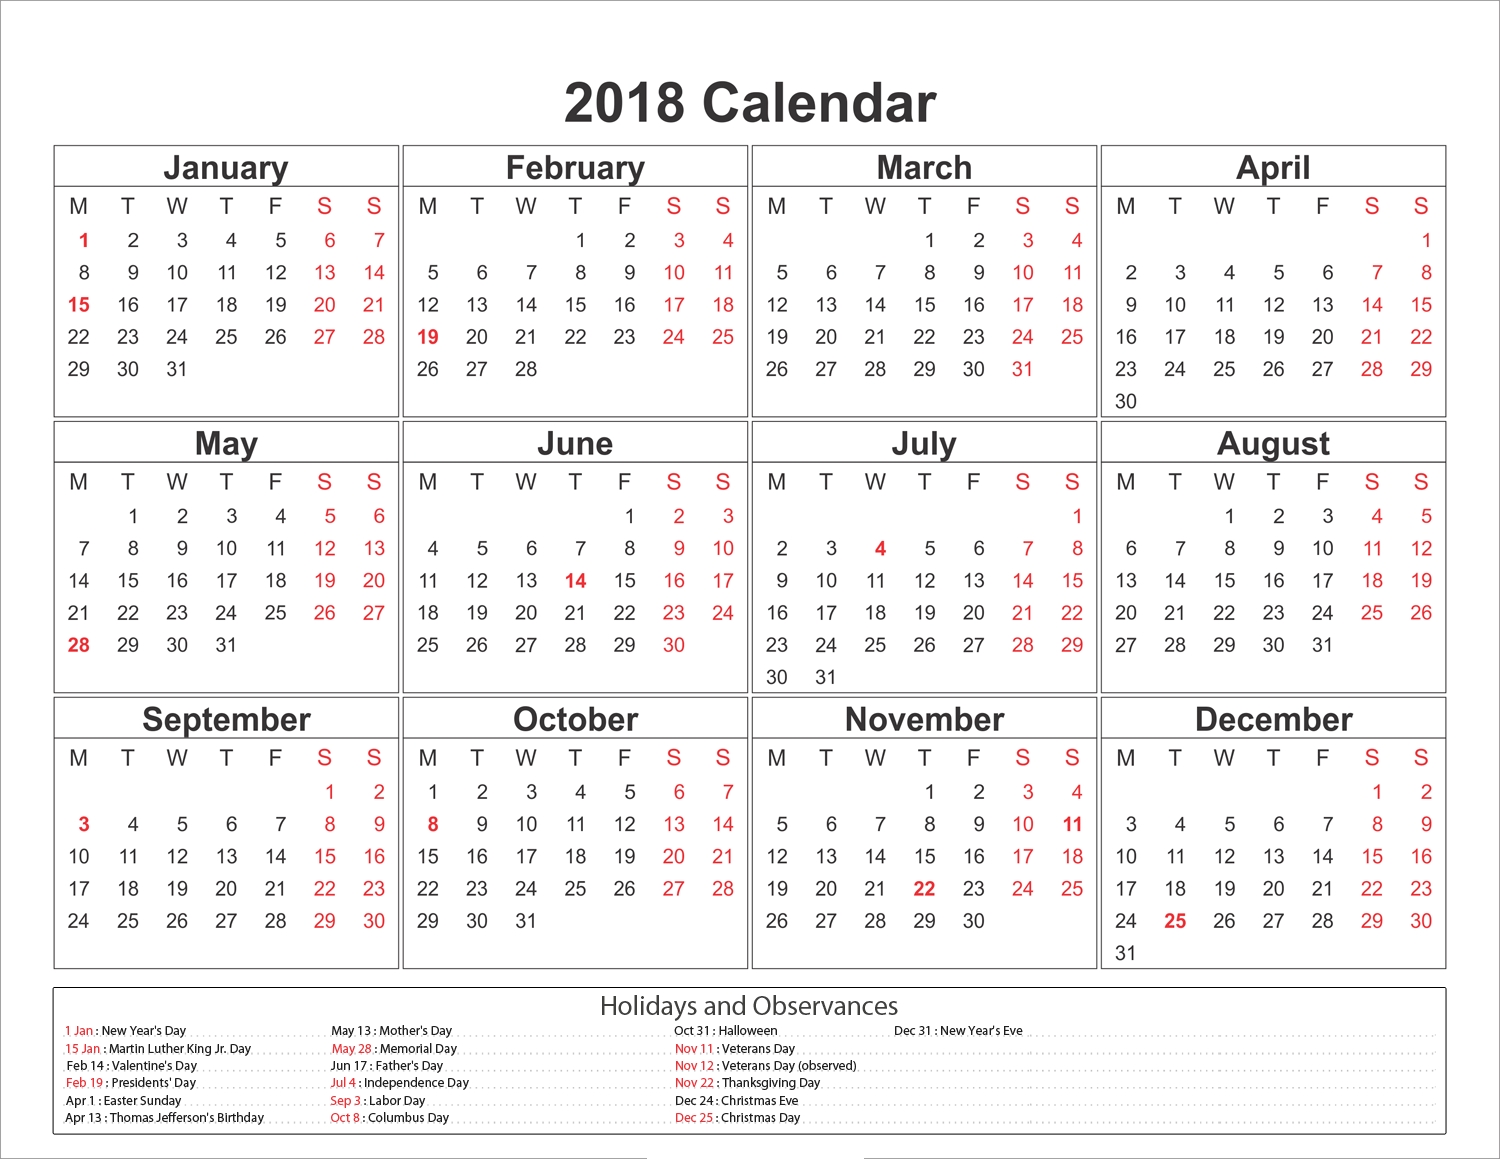 Free printable 2018 calendar with holidays